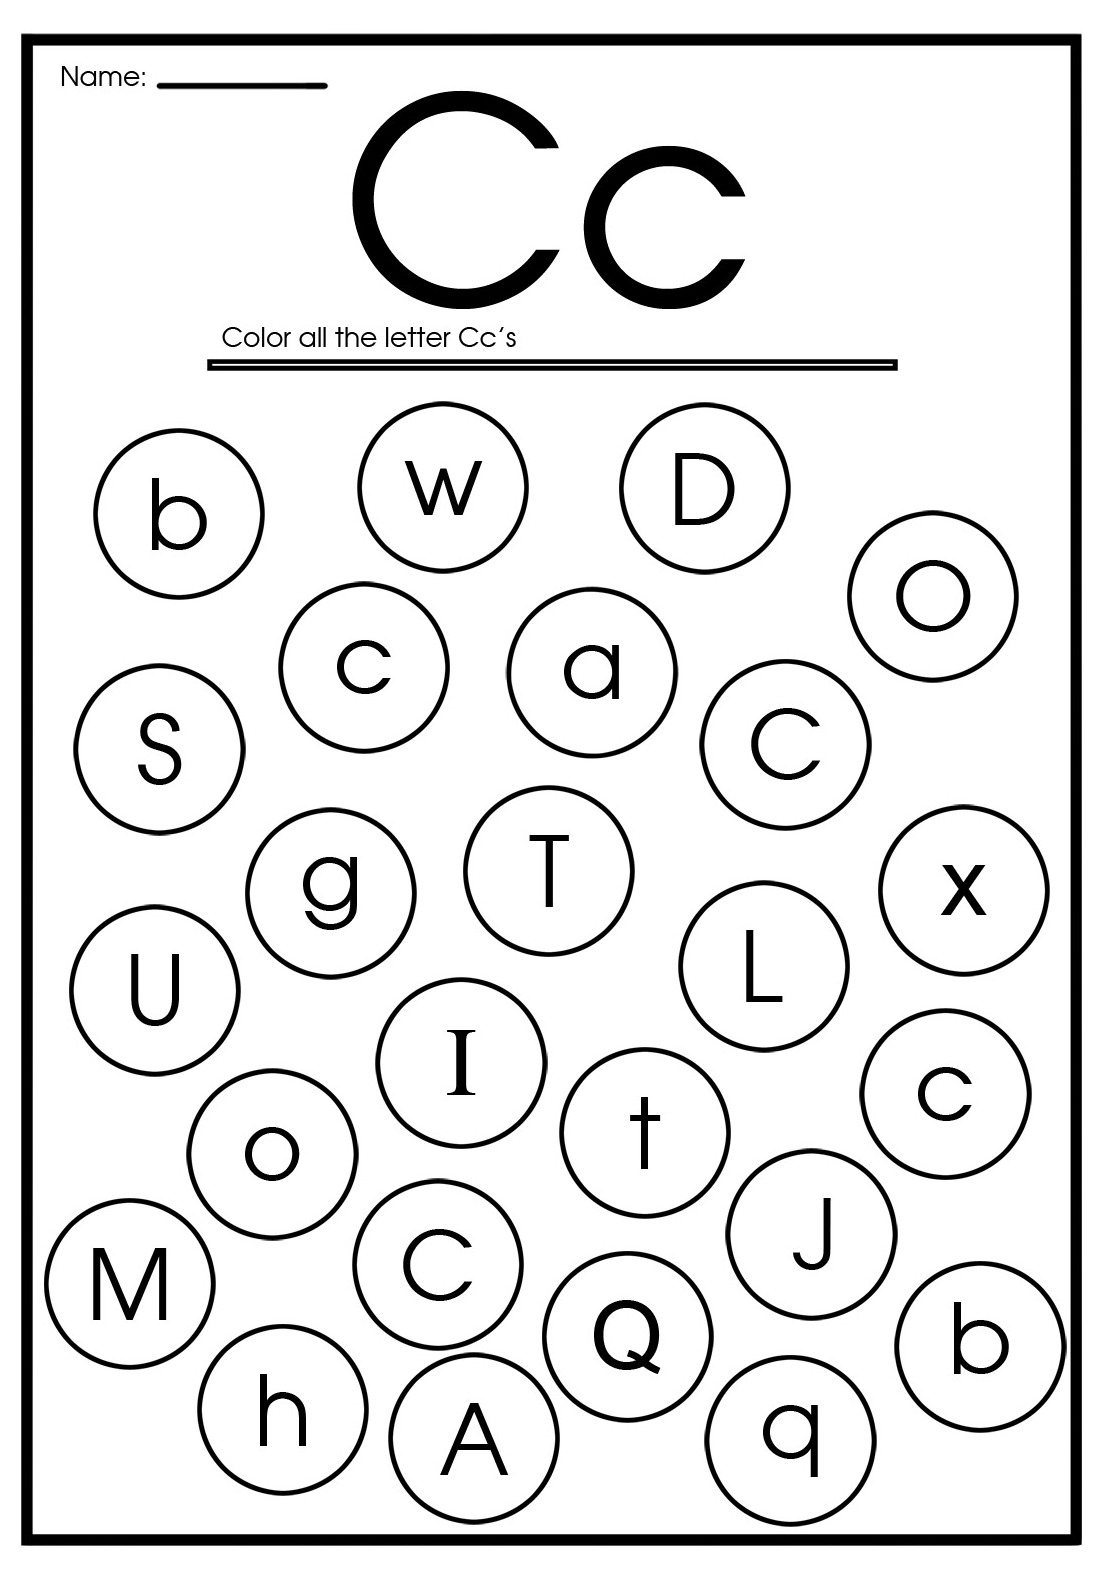 printable-letter-c-worksheets-for-kindergarten-preschoolers-49-best